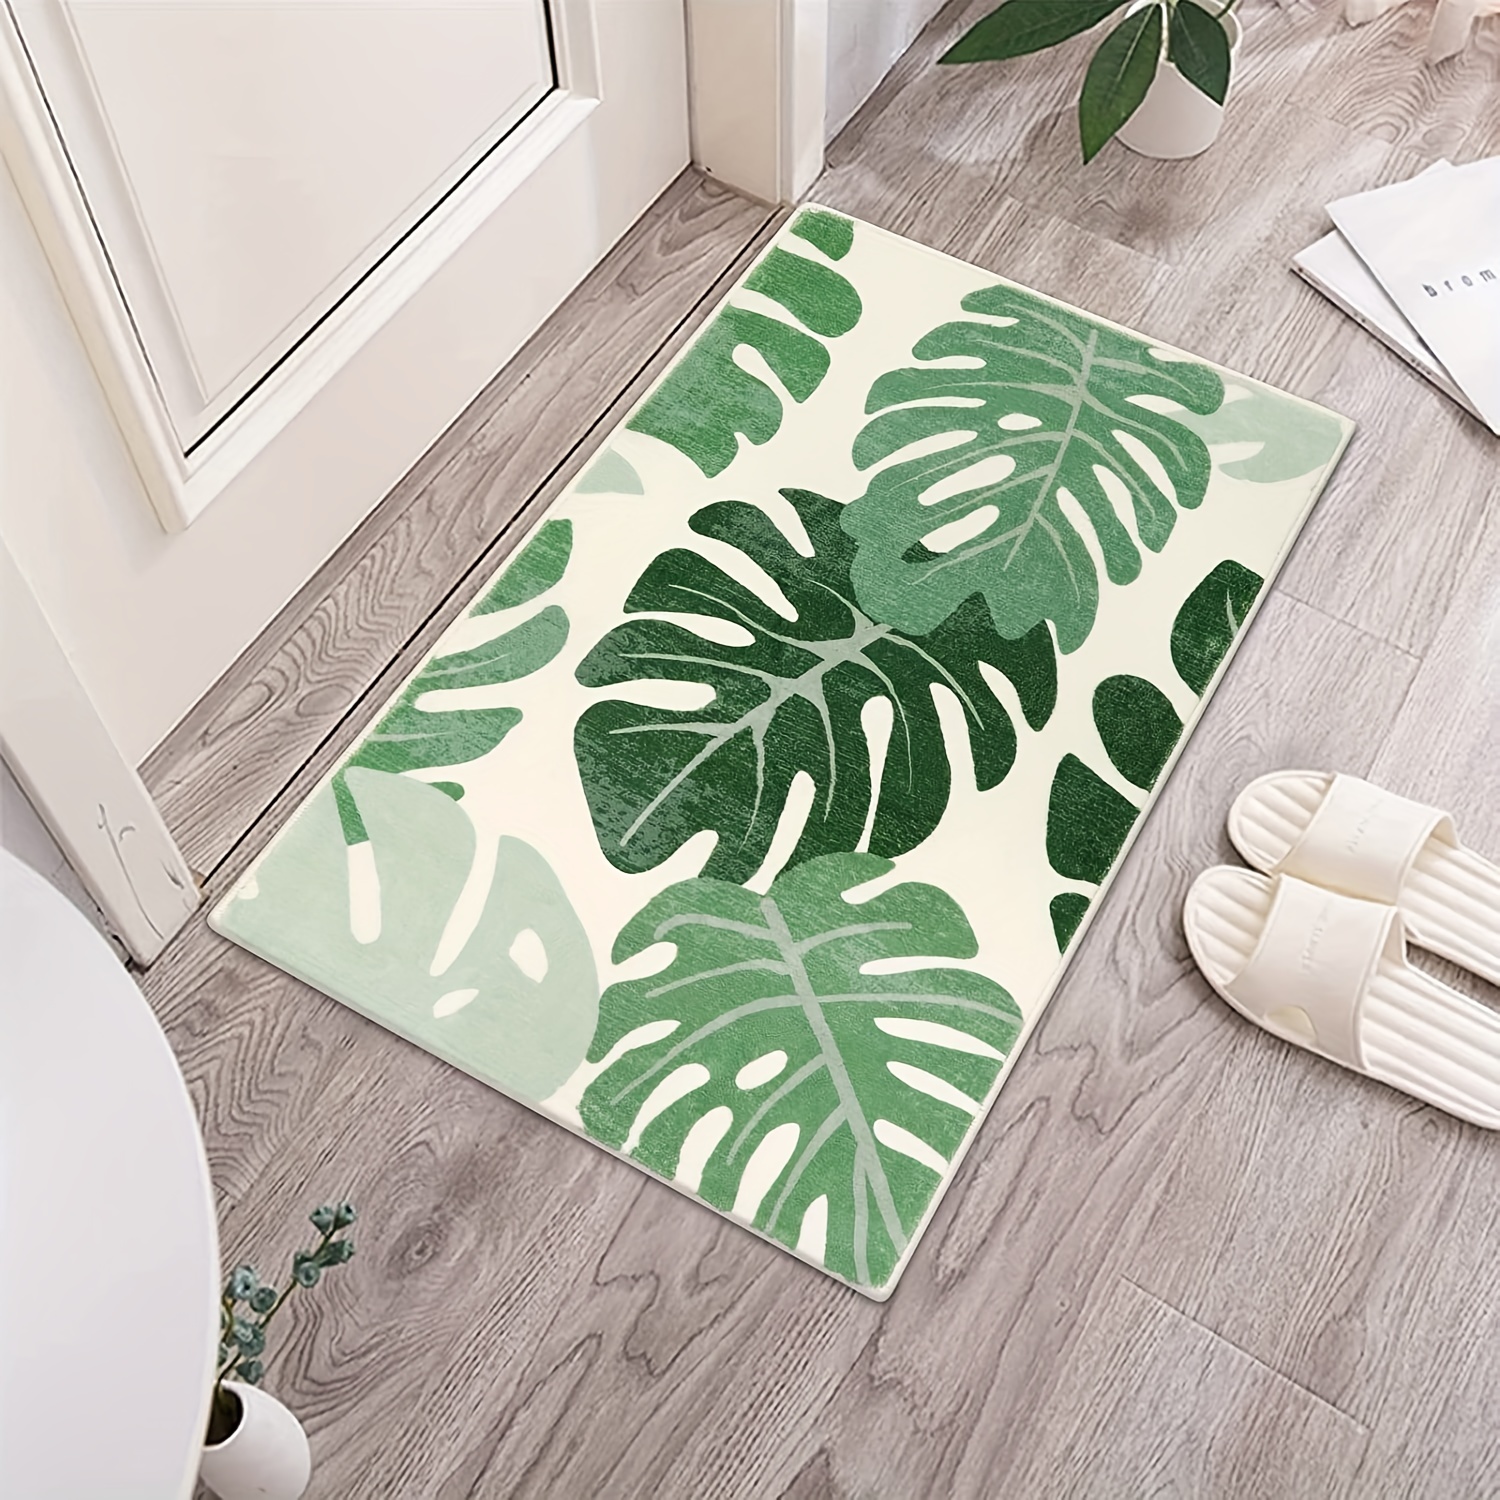 Bathroom Rugs, Green Leaf Non-slip Bath Mat, Extra Soft Long